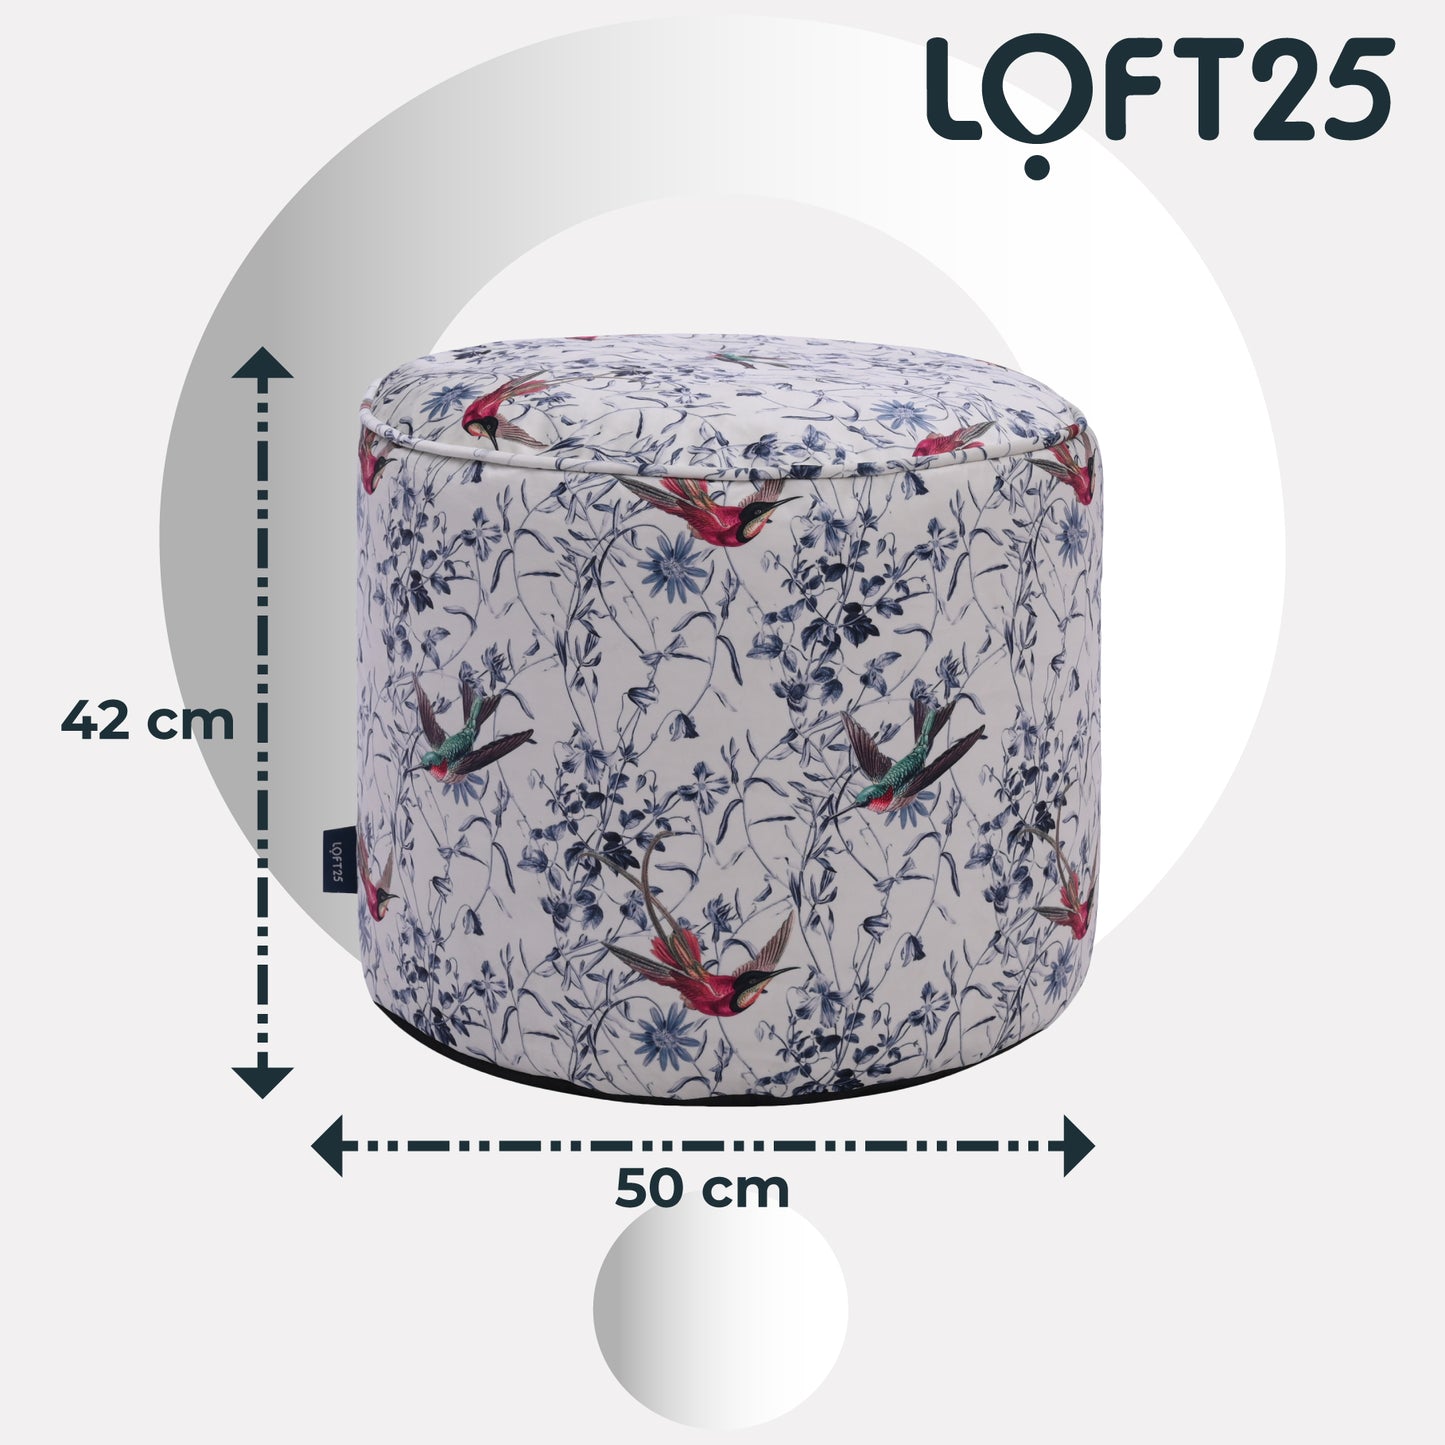 Loft 25 Printed Round Bean Bag Footstool